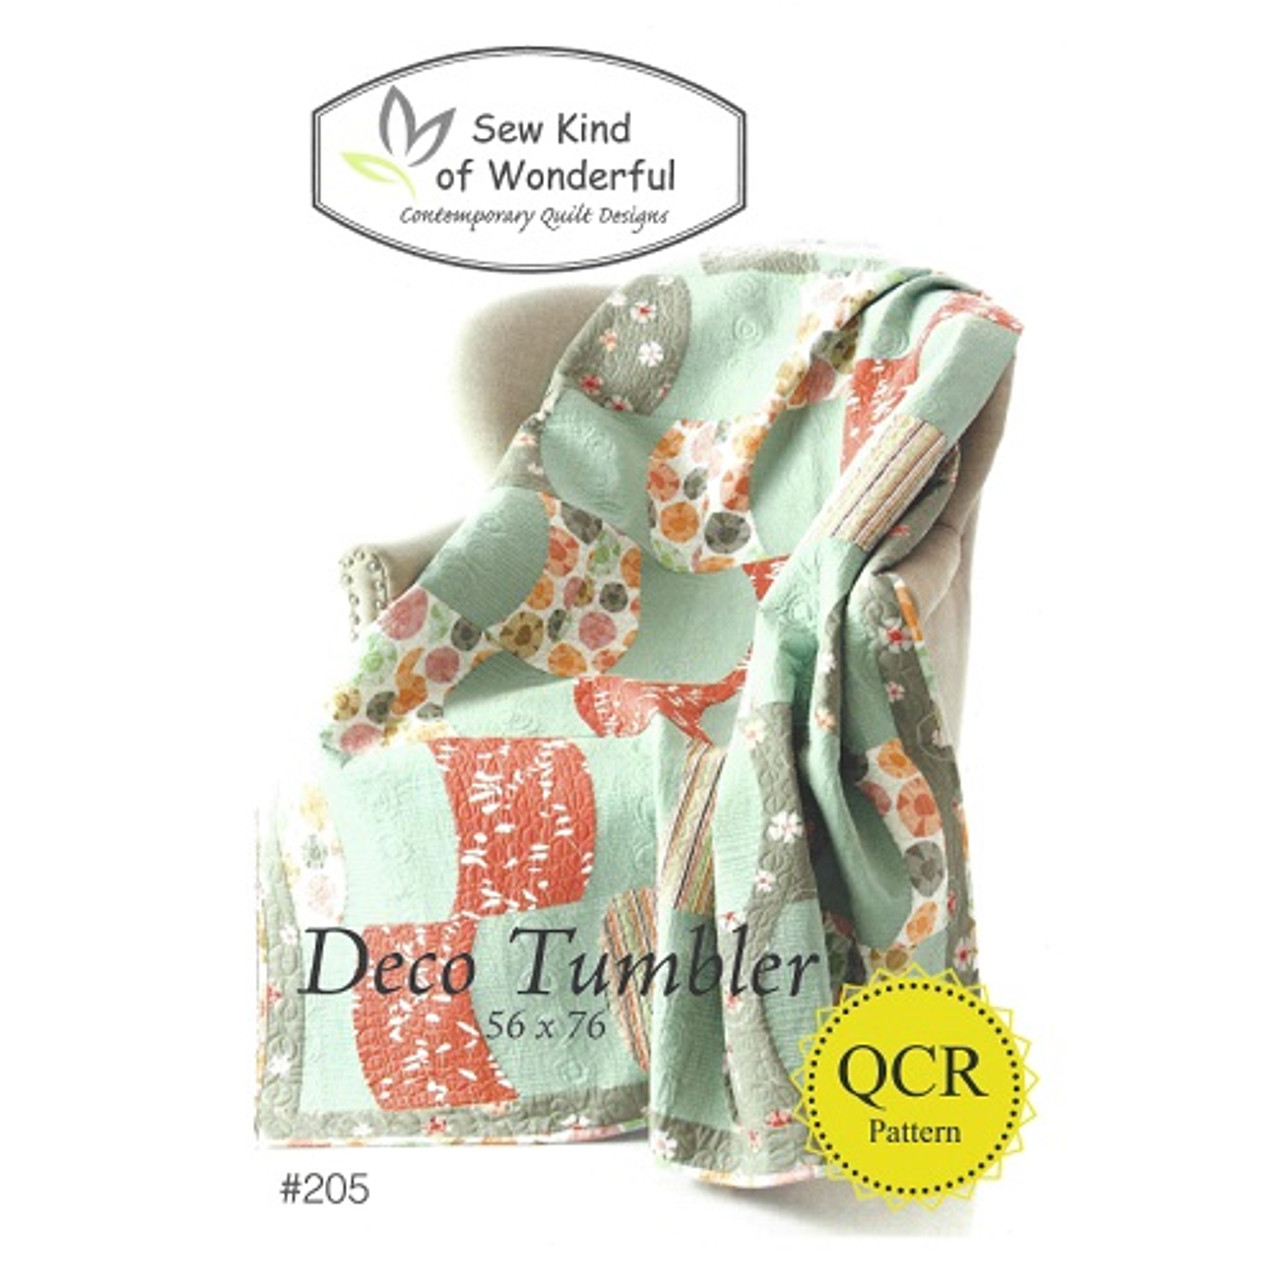 Deco Tumbler - Sew Kind of Wonderful - Pattern